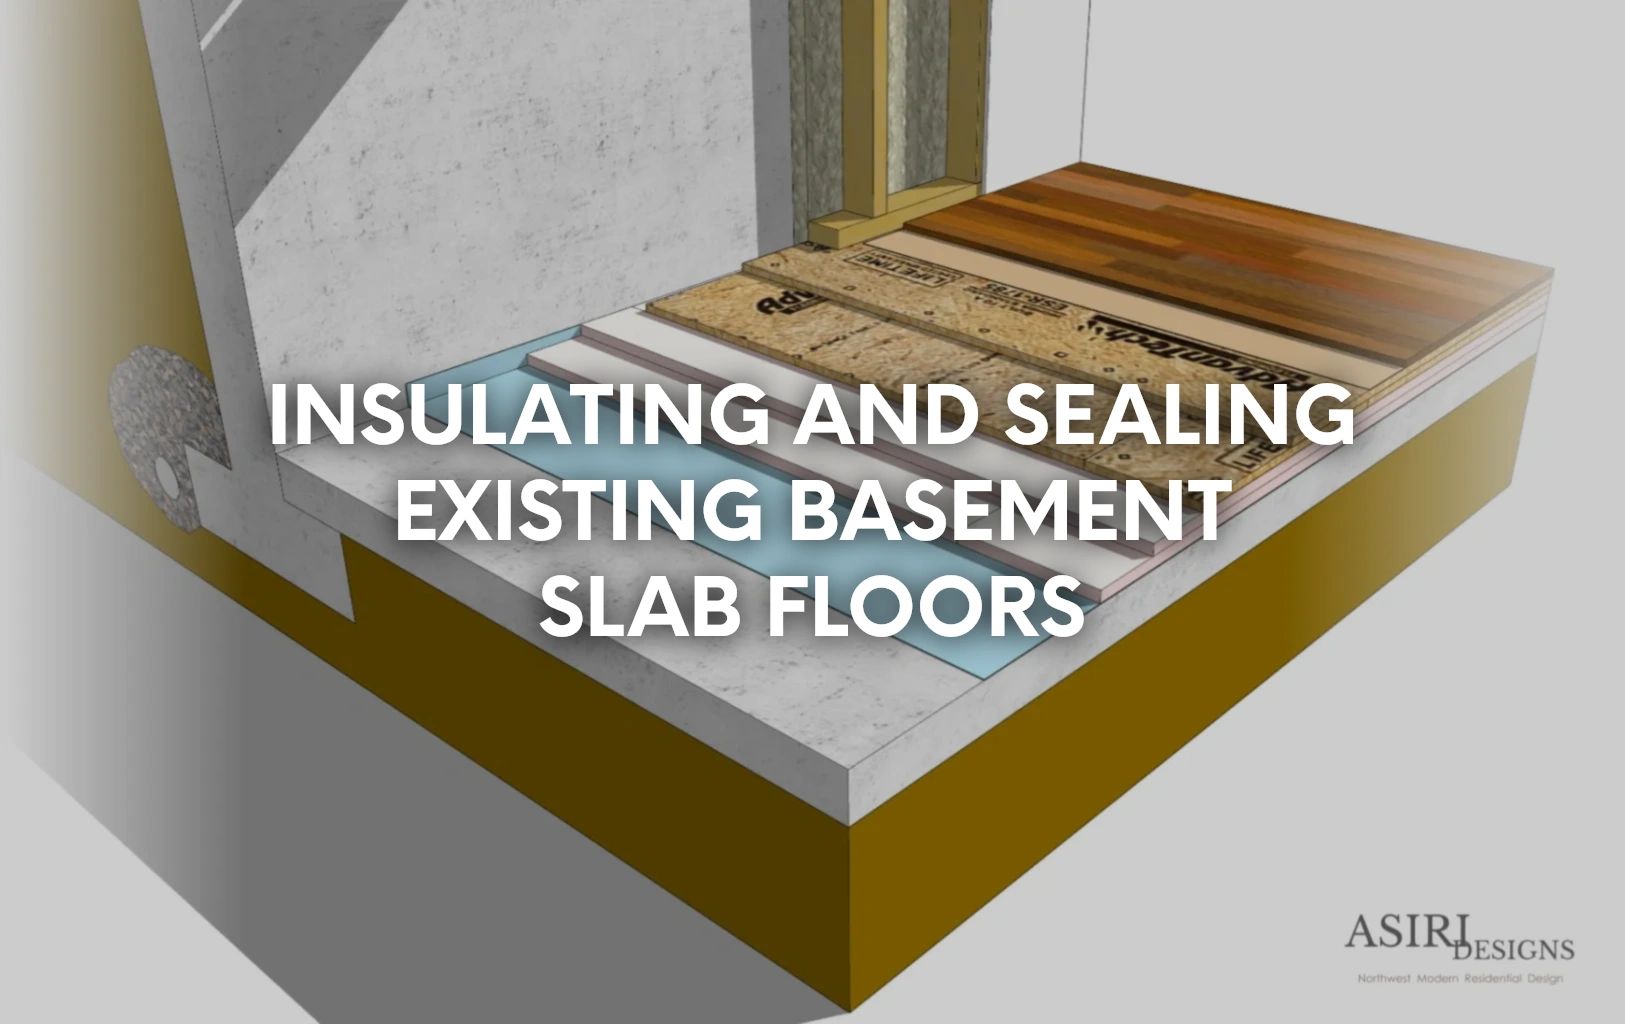 100% Epoxy to waterproof basements, slabs or any masonry surface